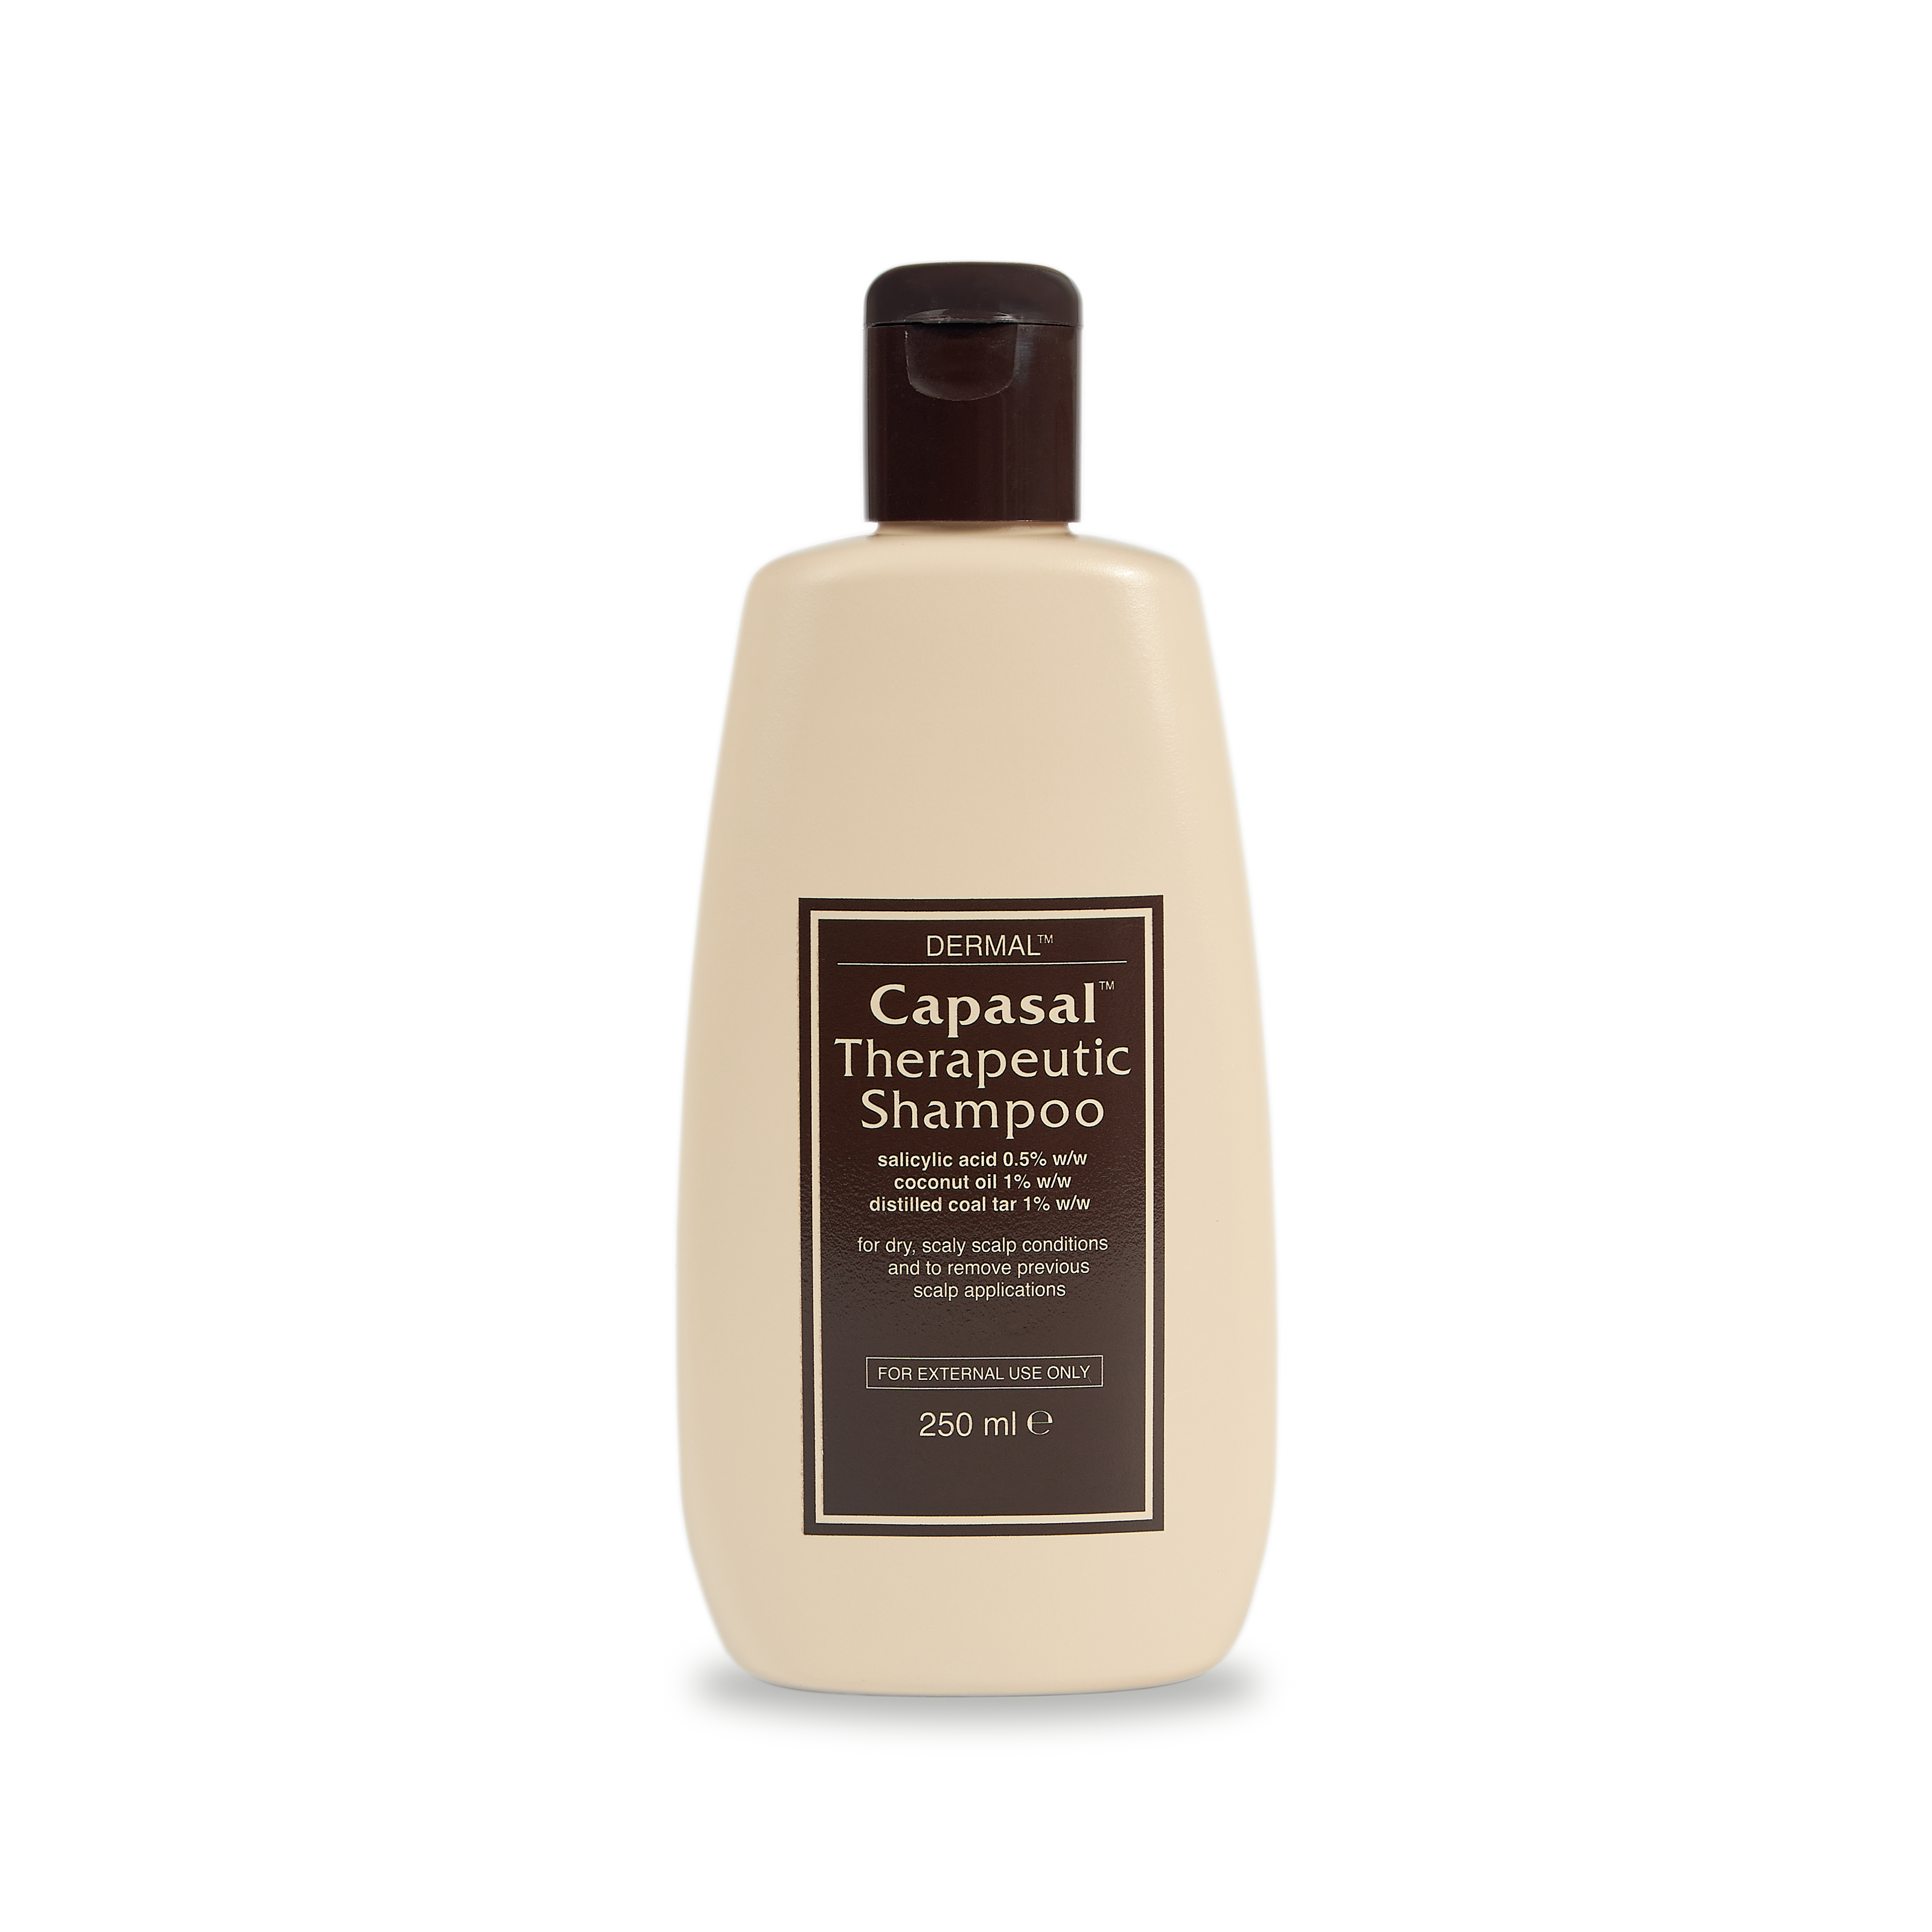 Capasal™ Therapeutic Shampoo